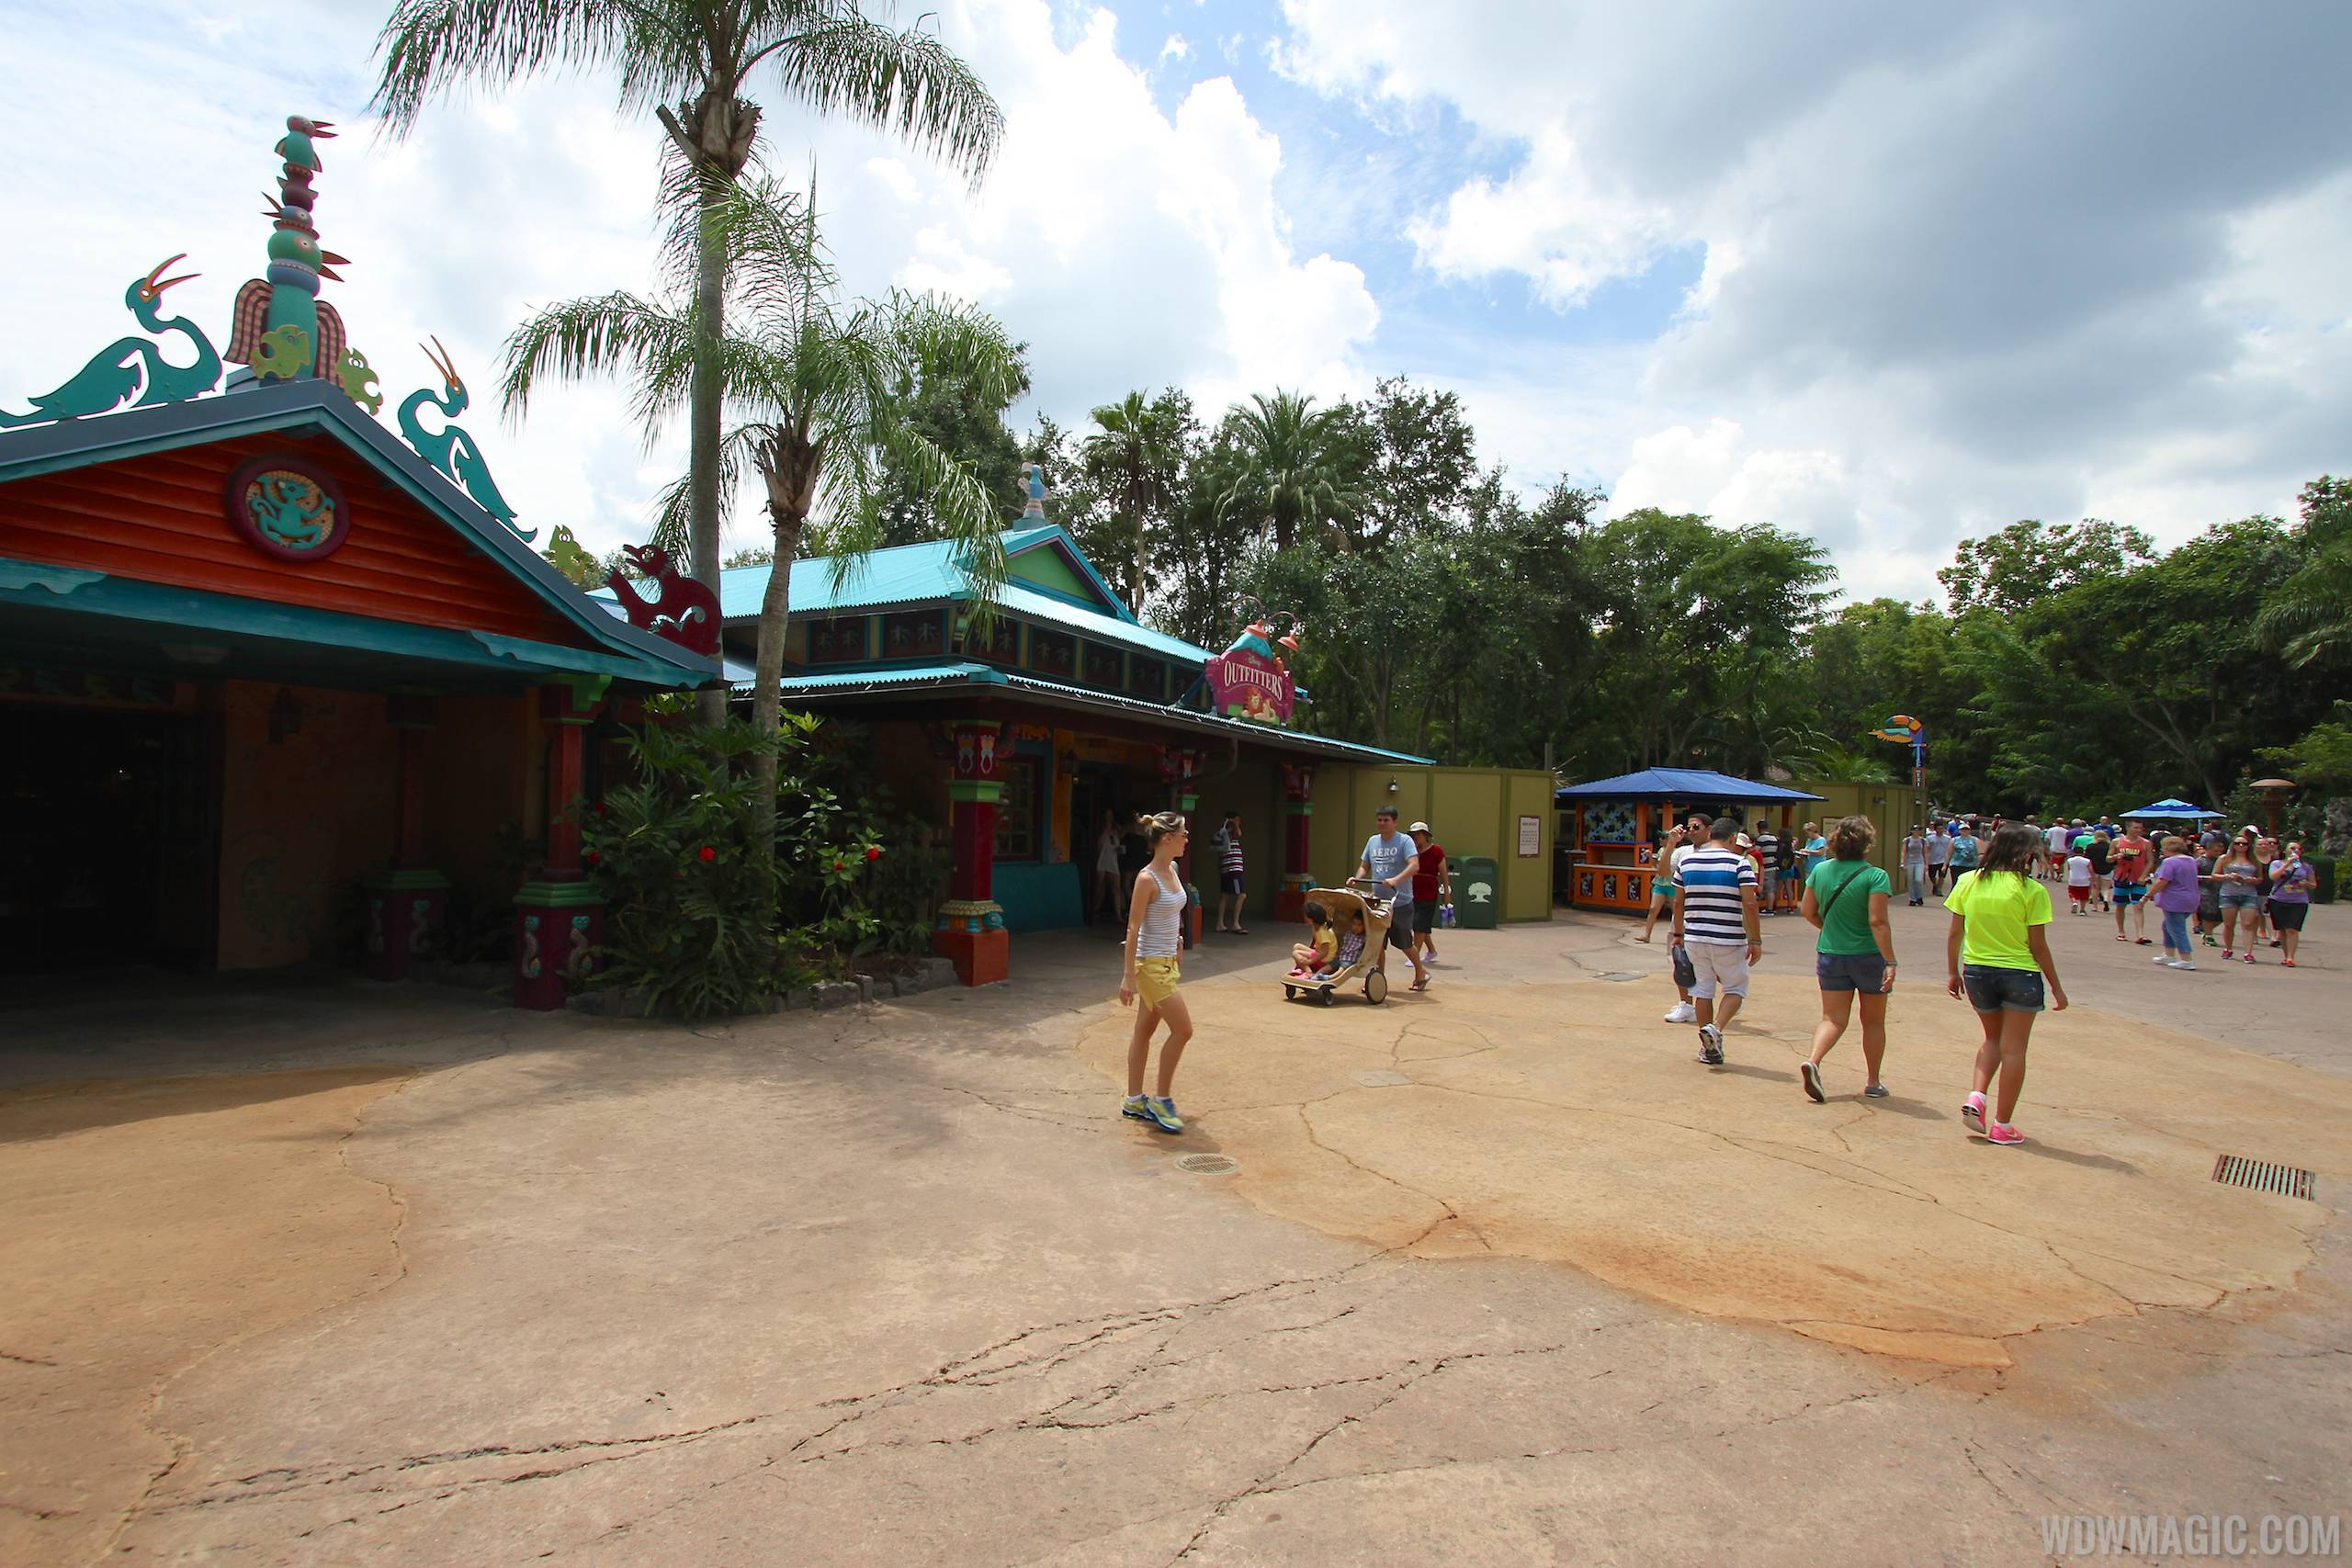 PHOTOS - Discovery Island expansion at Disney's Animal Kingdom underway